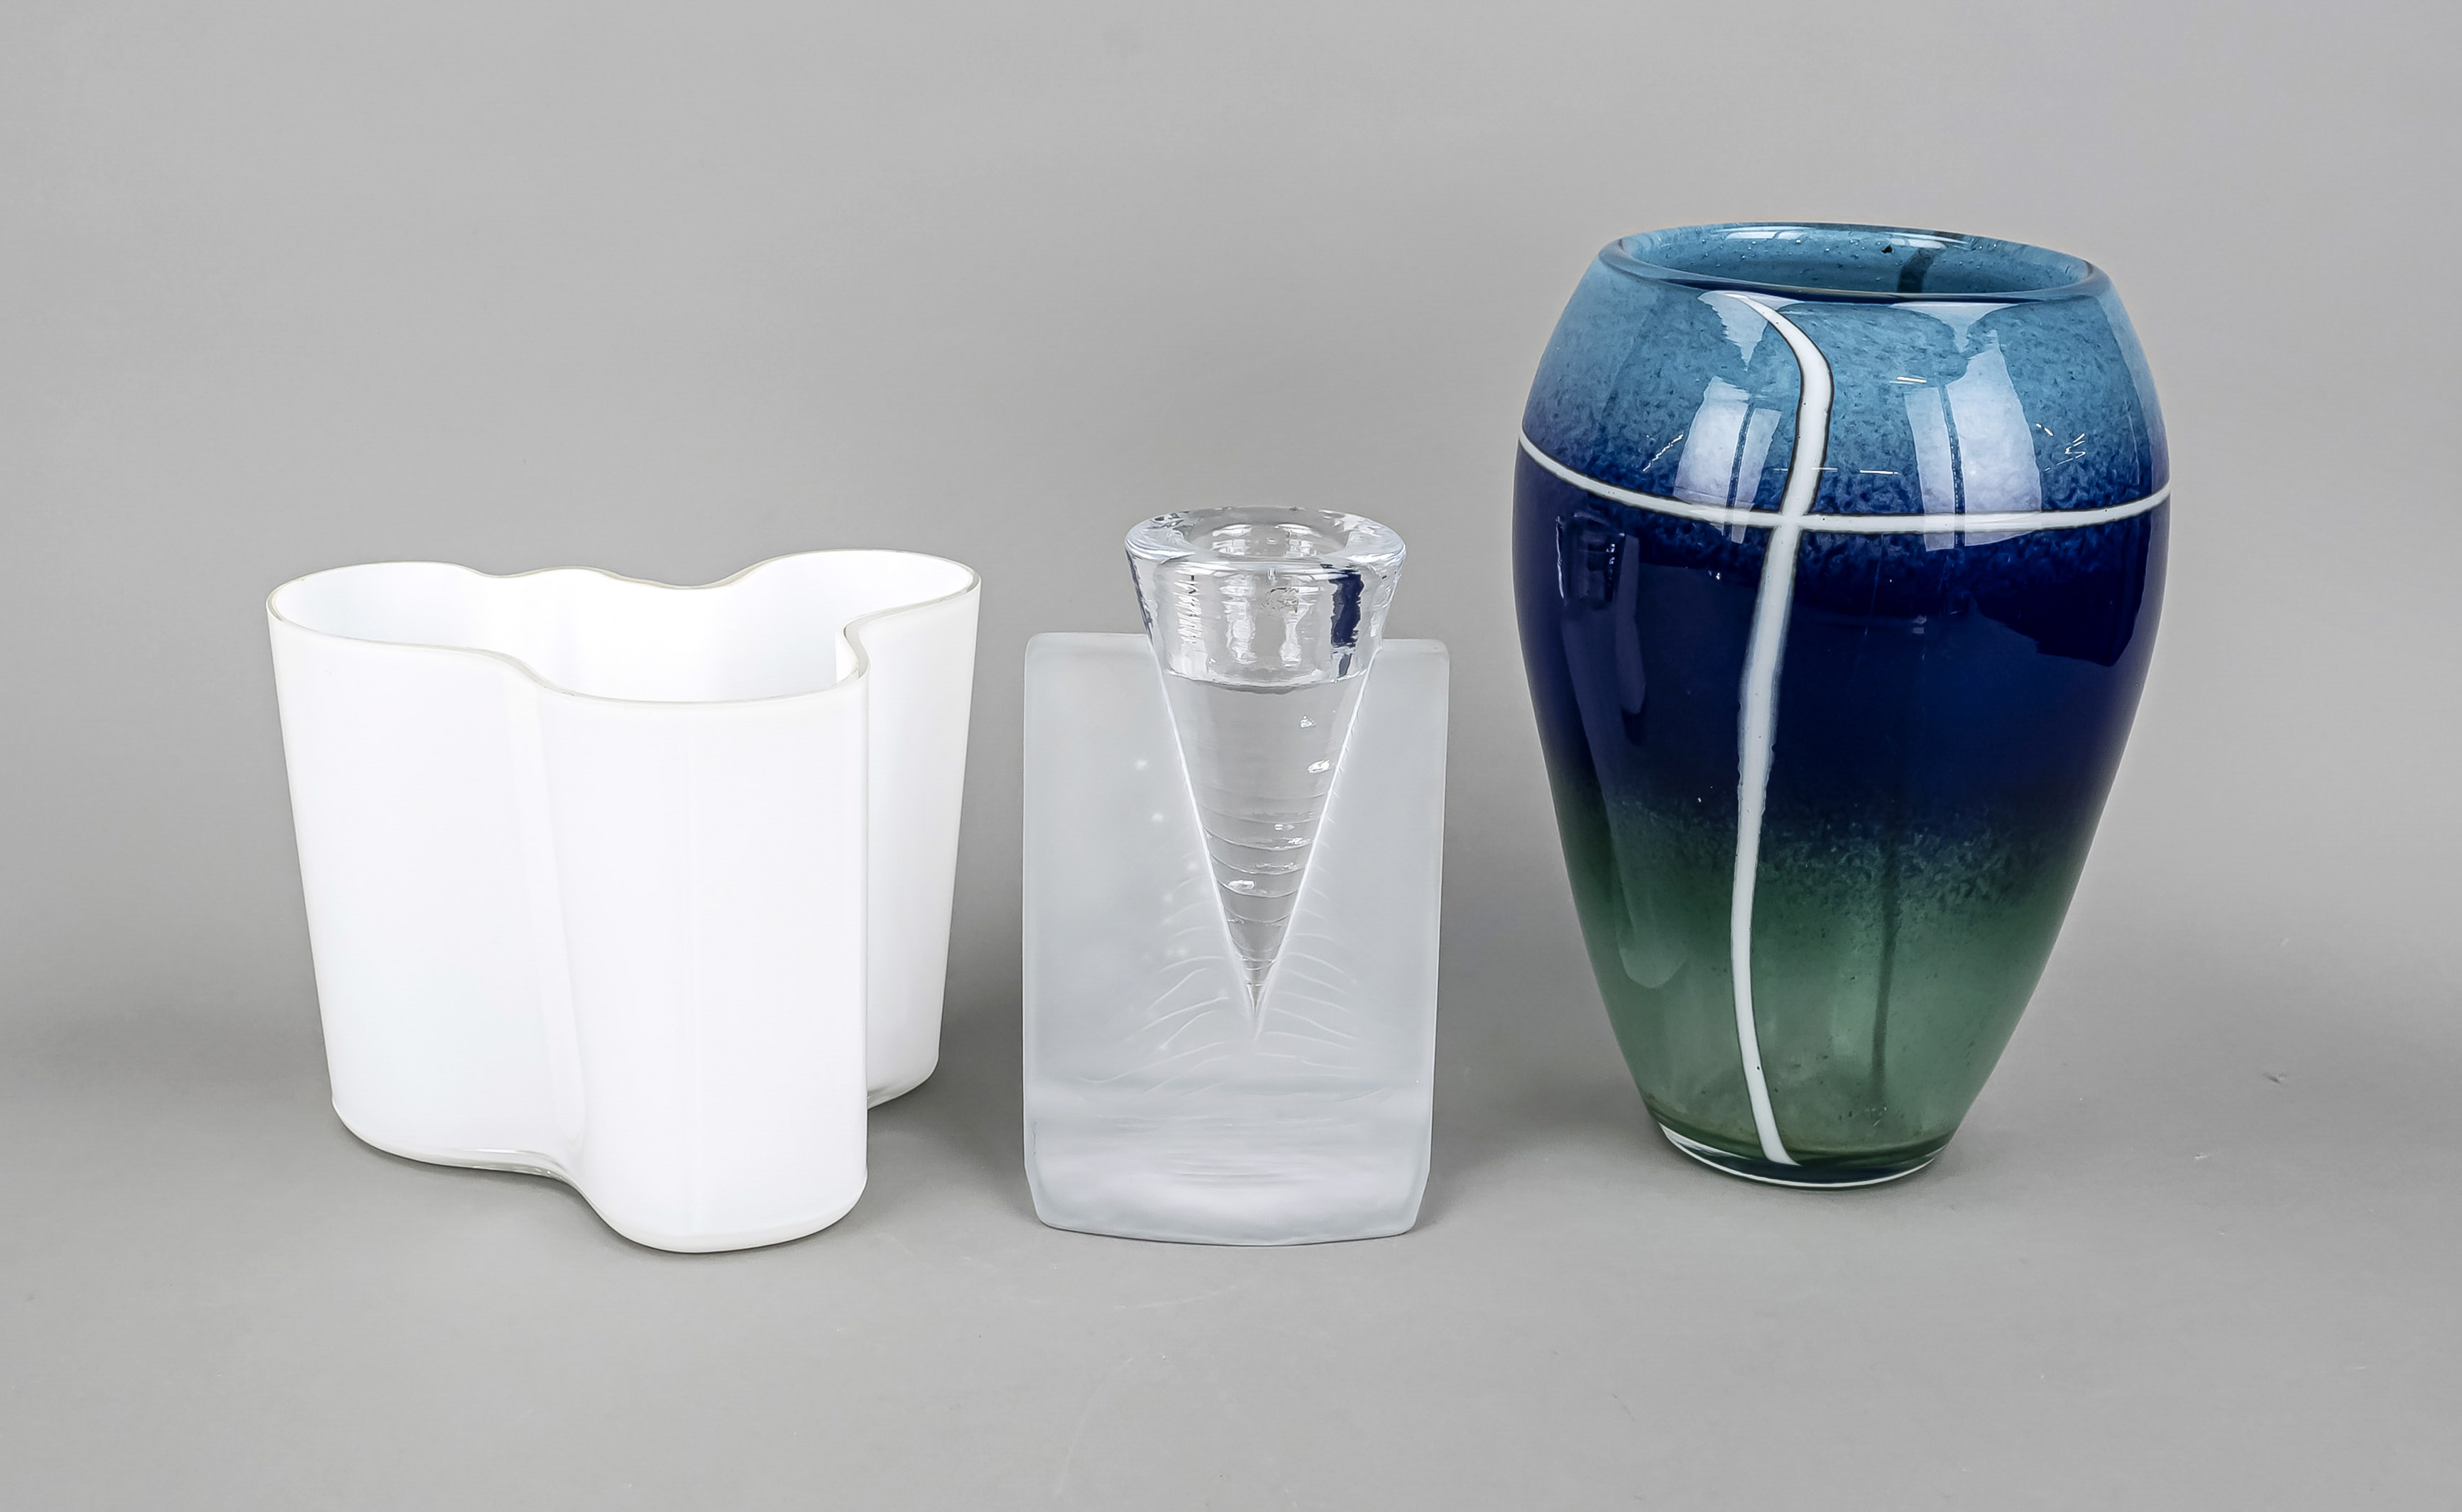 Three pieces of art glass, vase, Finland, Iittala, 2nd half of the 20th century, designed by Alvar